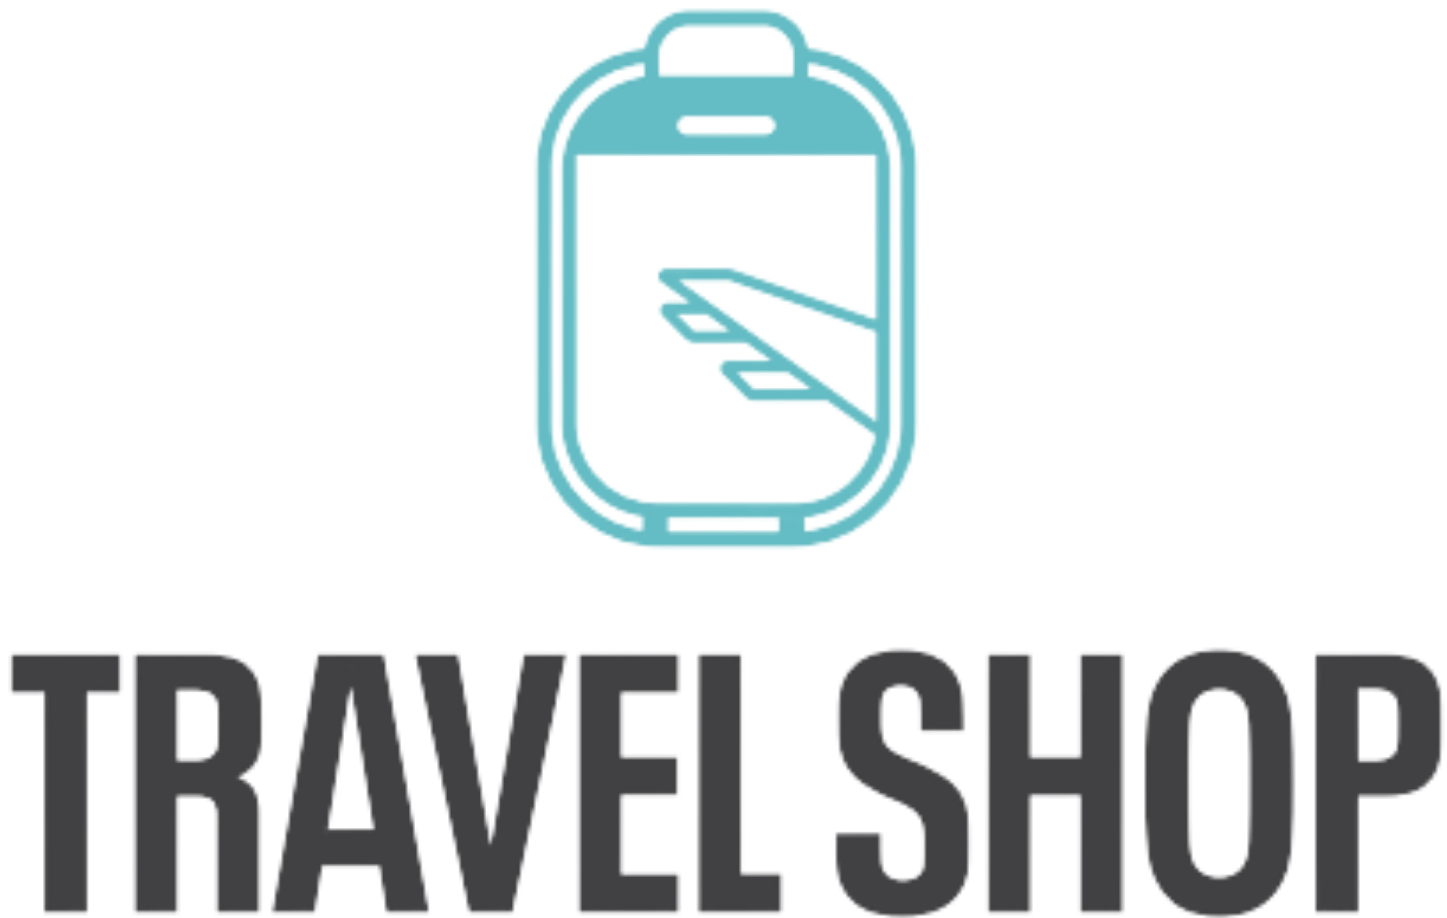 Travel Shop